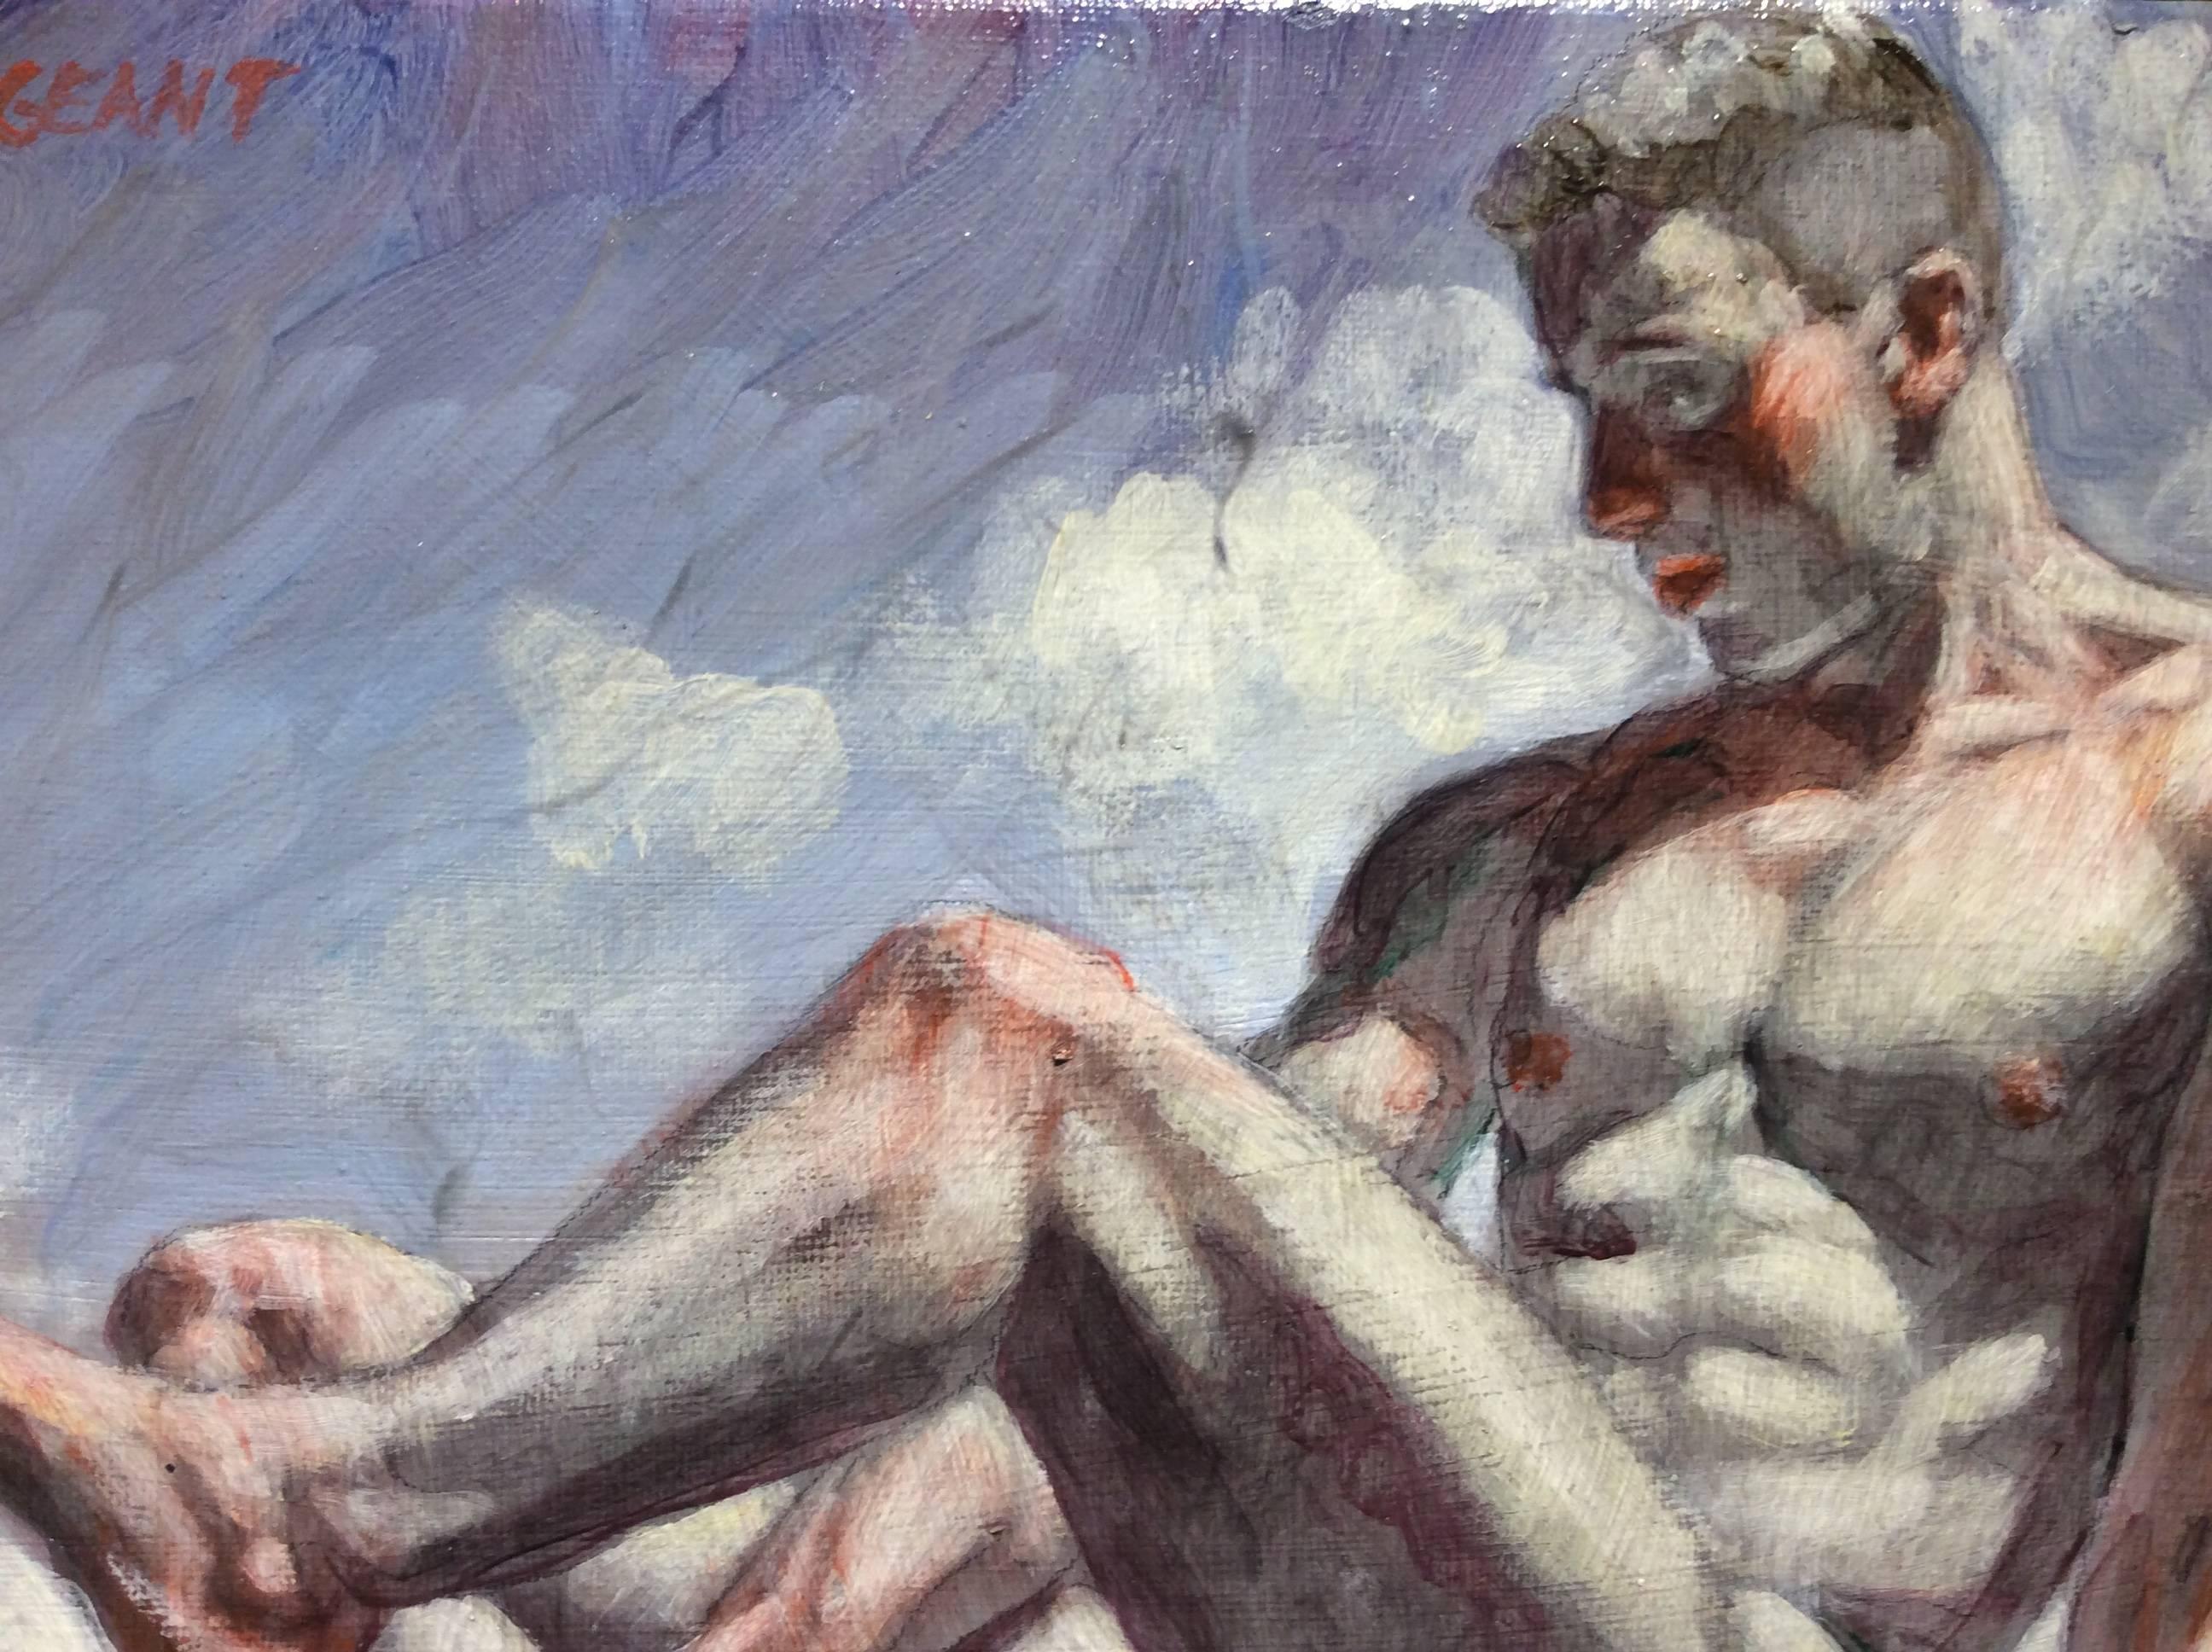 painted nude men